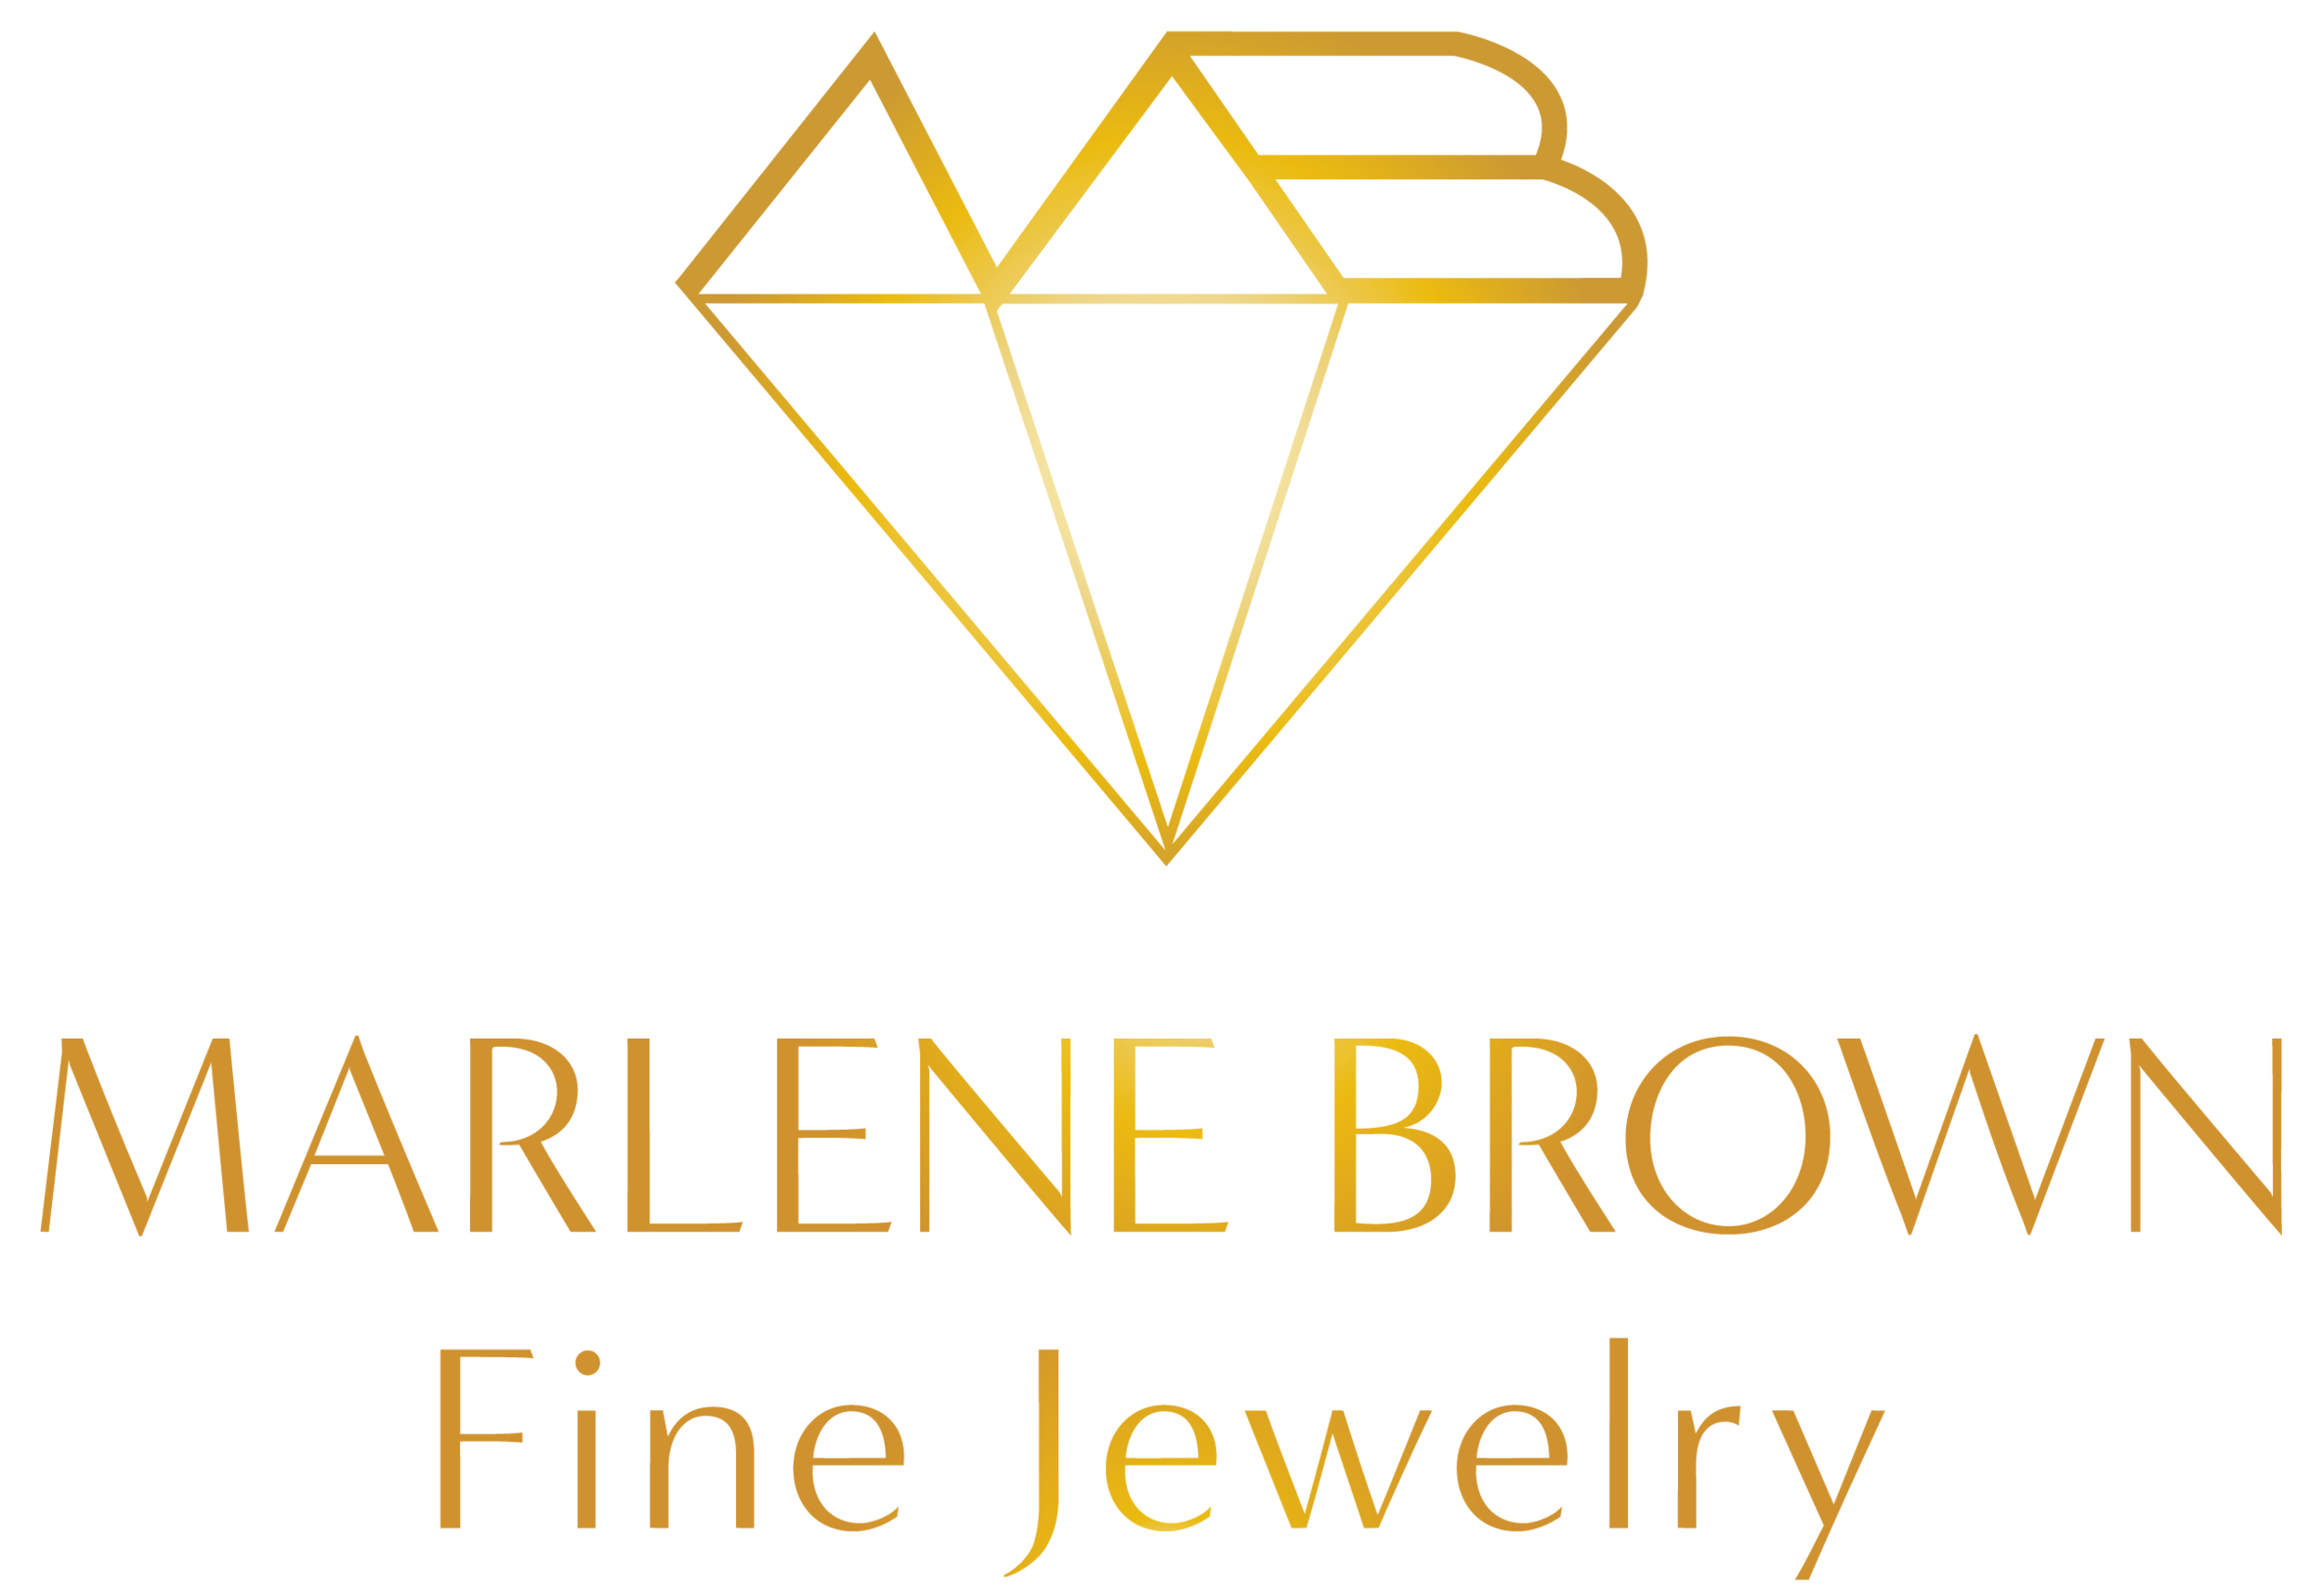 Marlene Brown Fine Jewelry